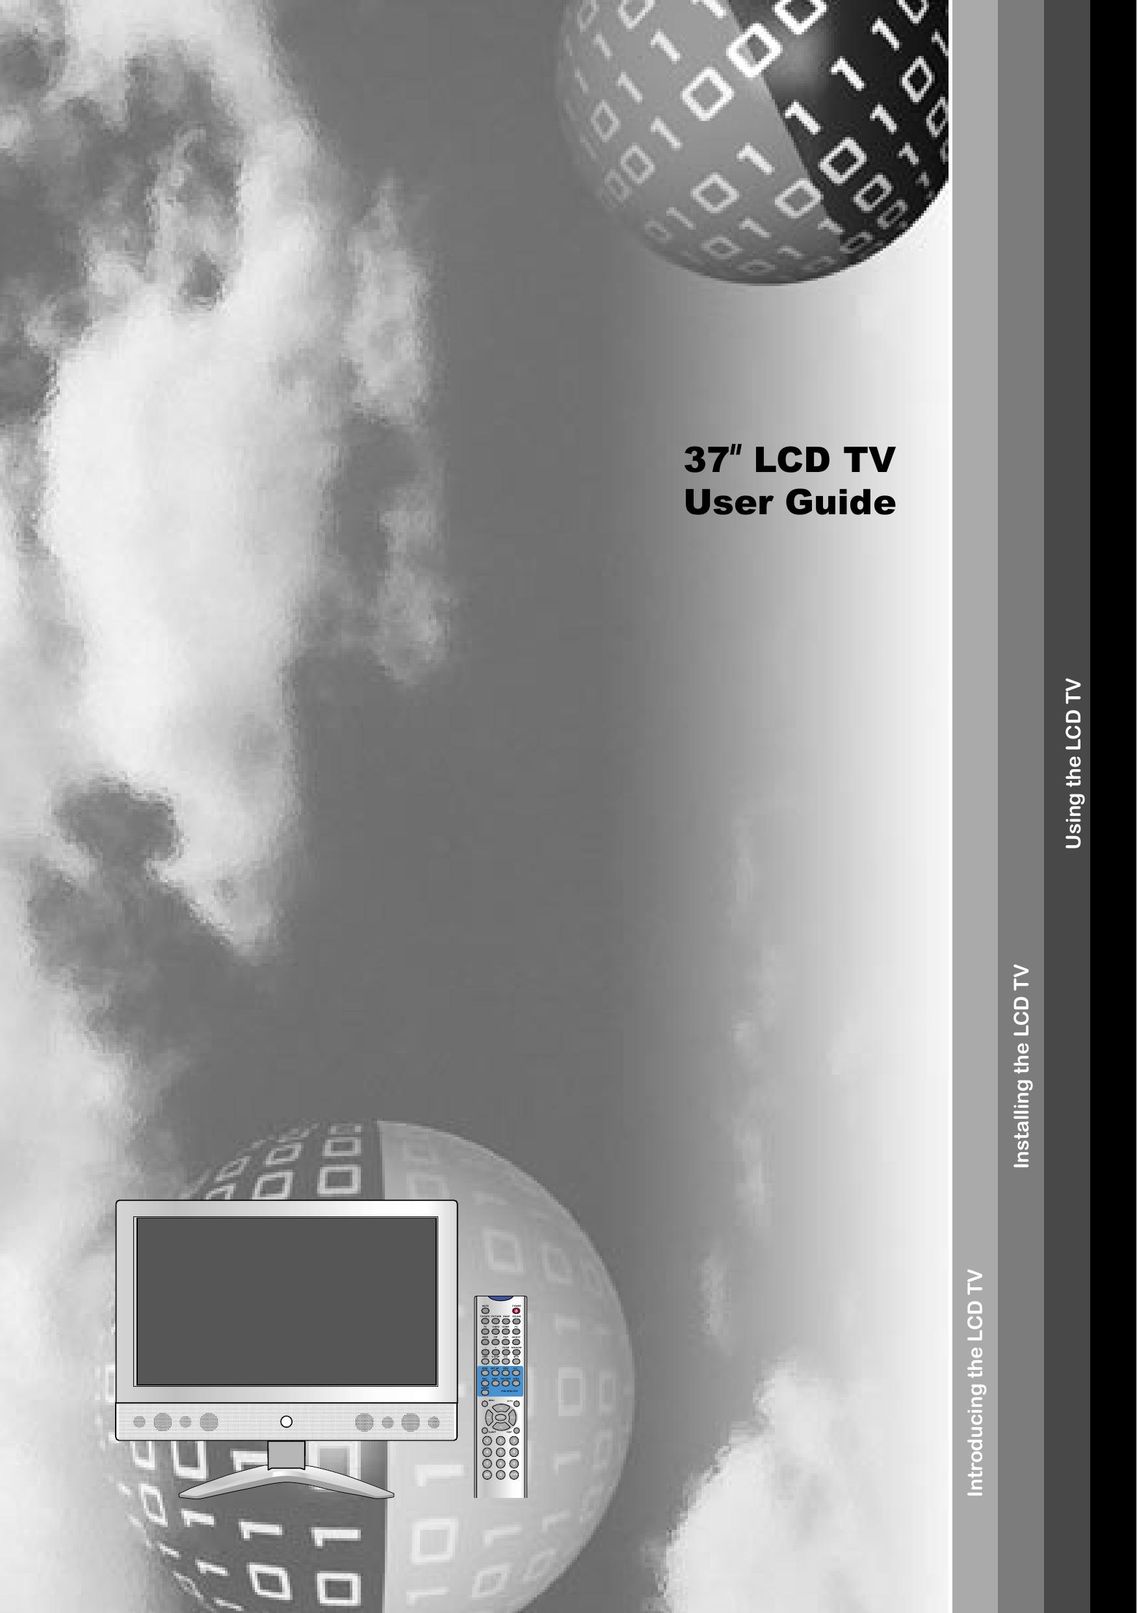 Emprex HD-3701 Flat Panel Television User Manual